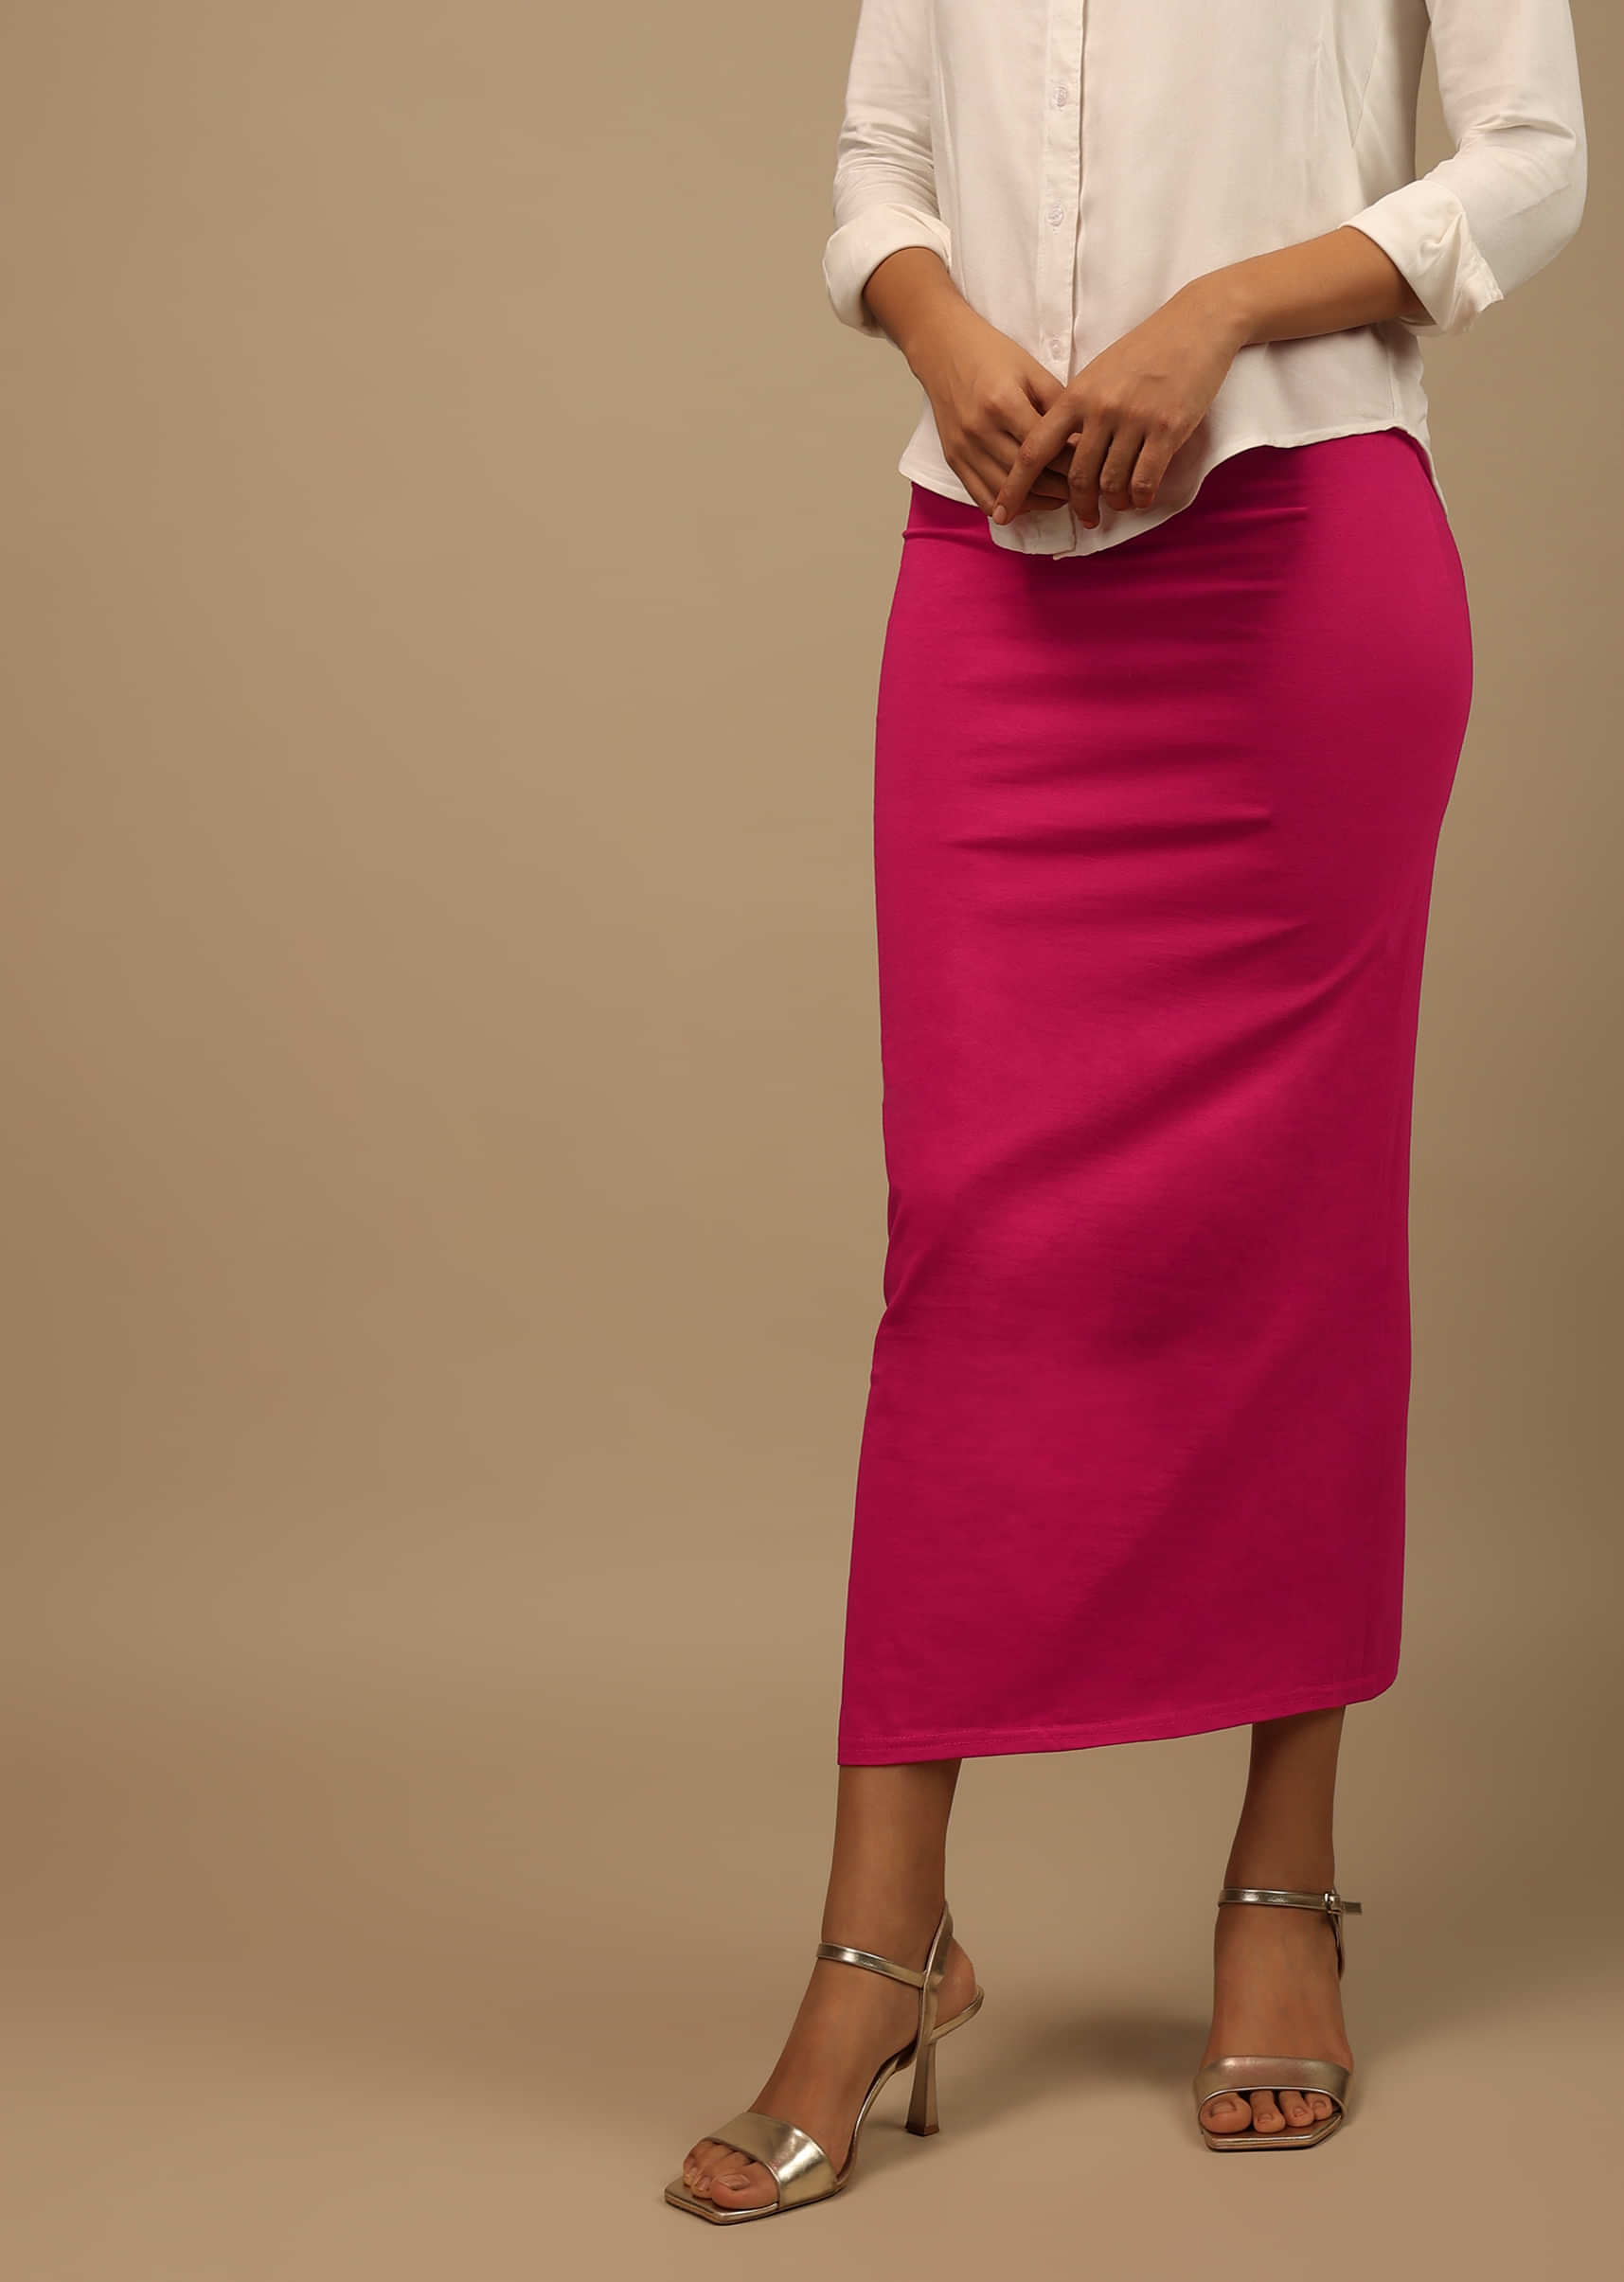 https://newcdn.kalkifashion.com/media/catalog/product/r/a/rani_pink_shapewear_saree_petticoat_in_cotton_lycra_with_e_3_.jpg?aio-w=500